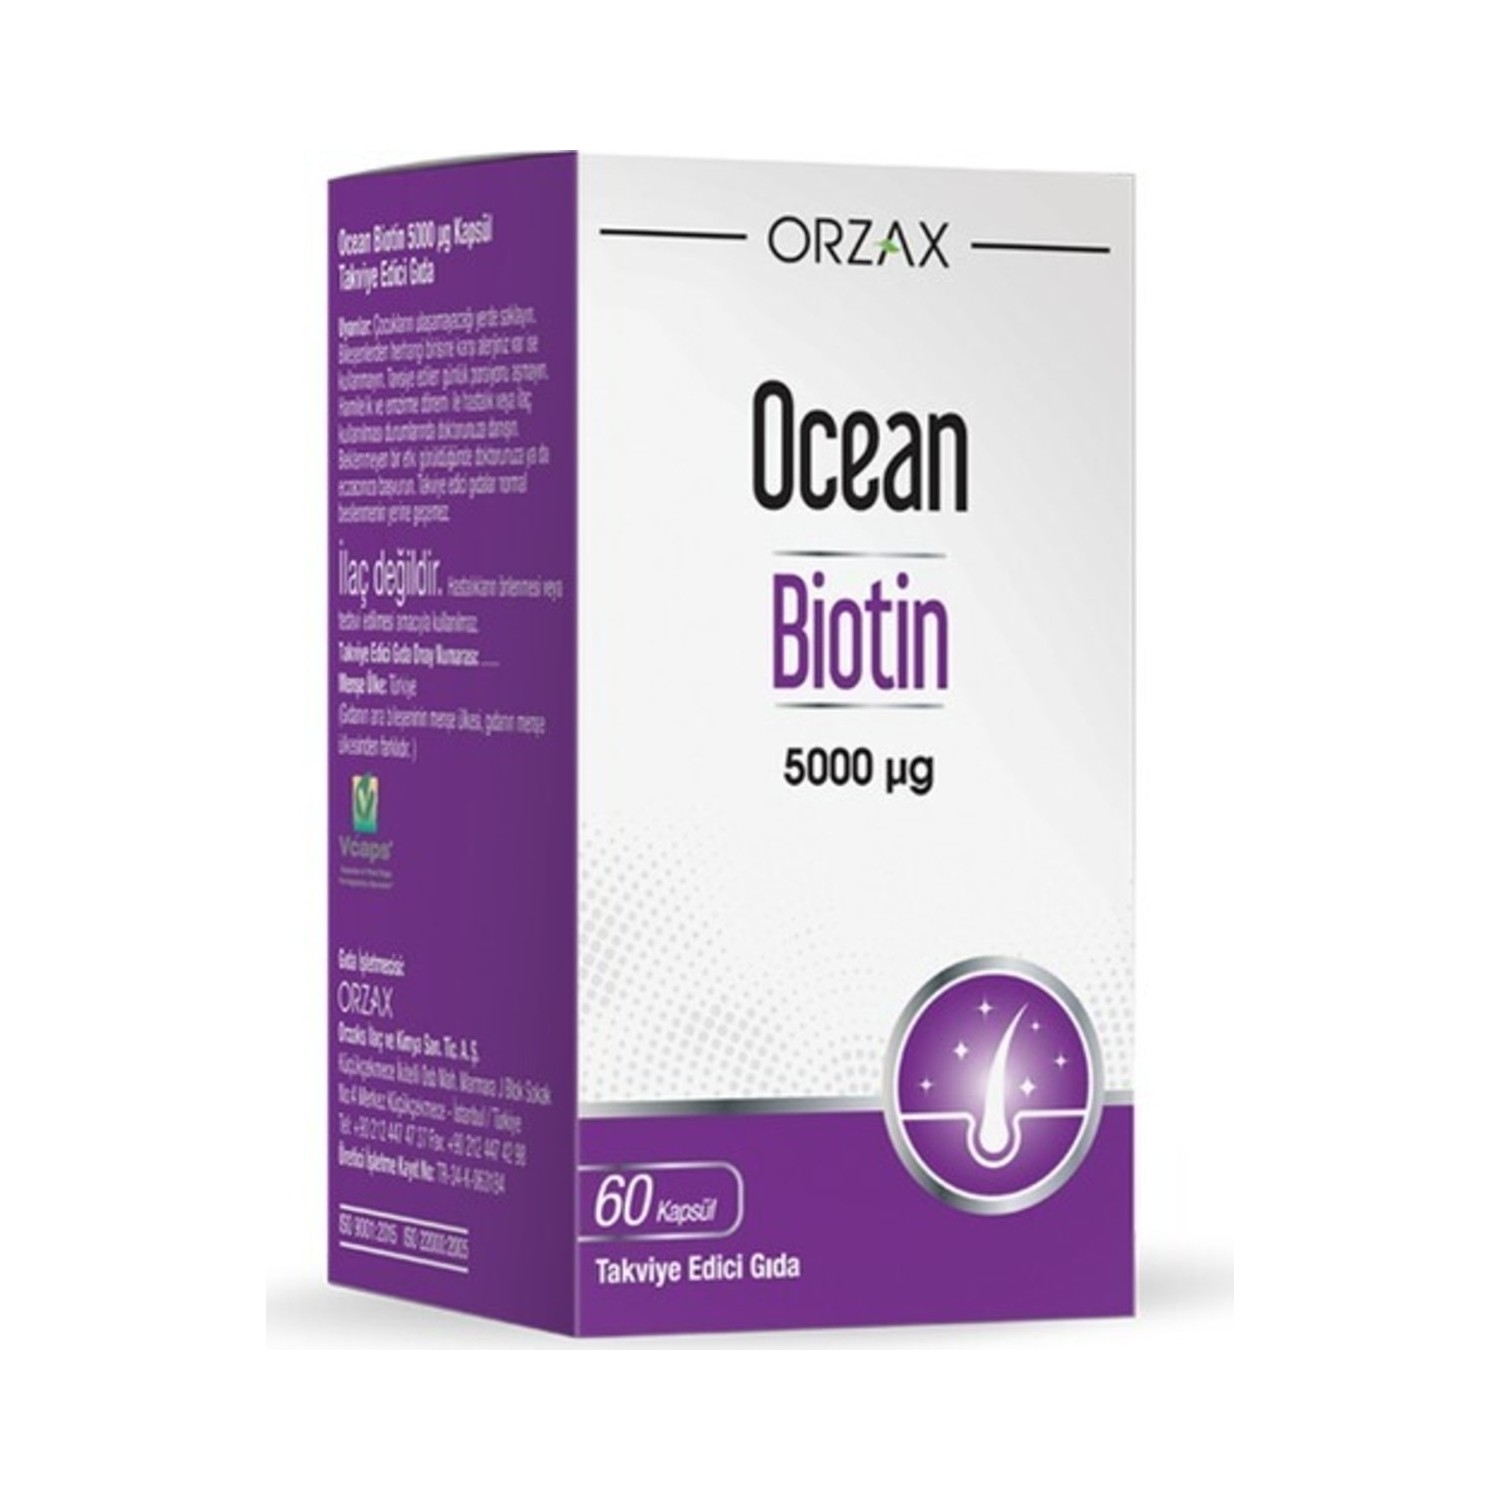 Биотин Ocean Orzax 5000 мкг, 60 капсул биотин orzax ocean 5000 мкг 60 капсул